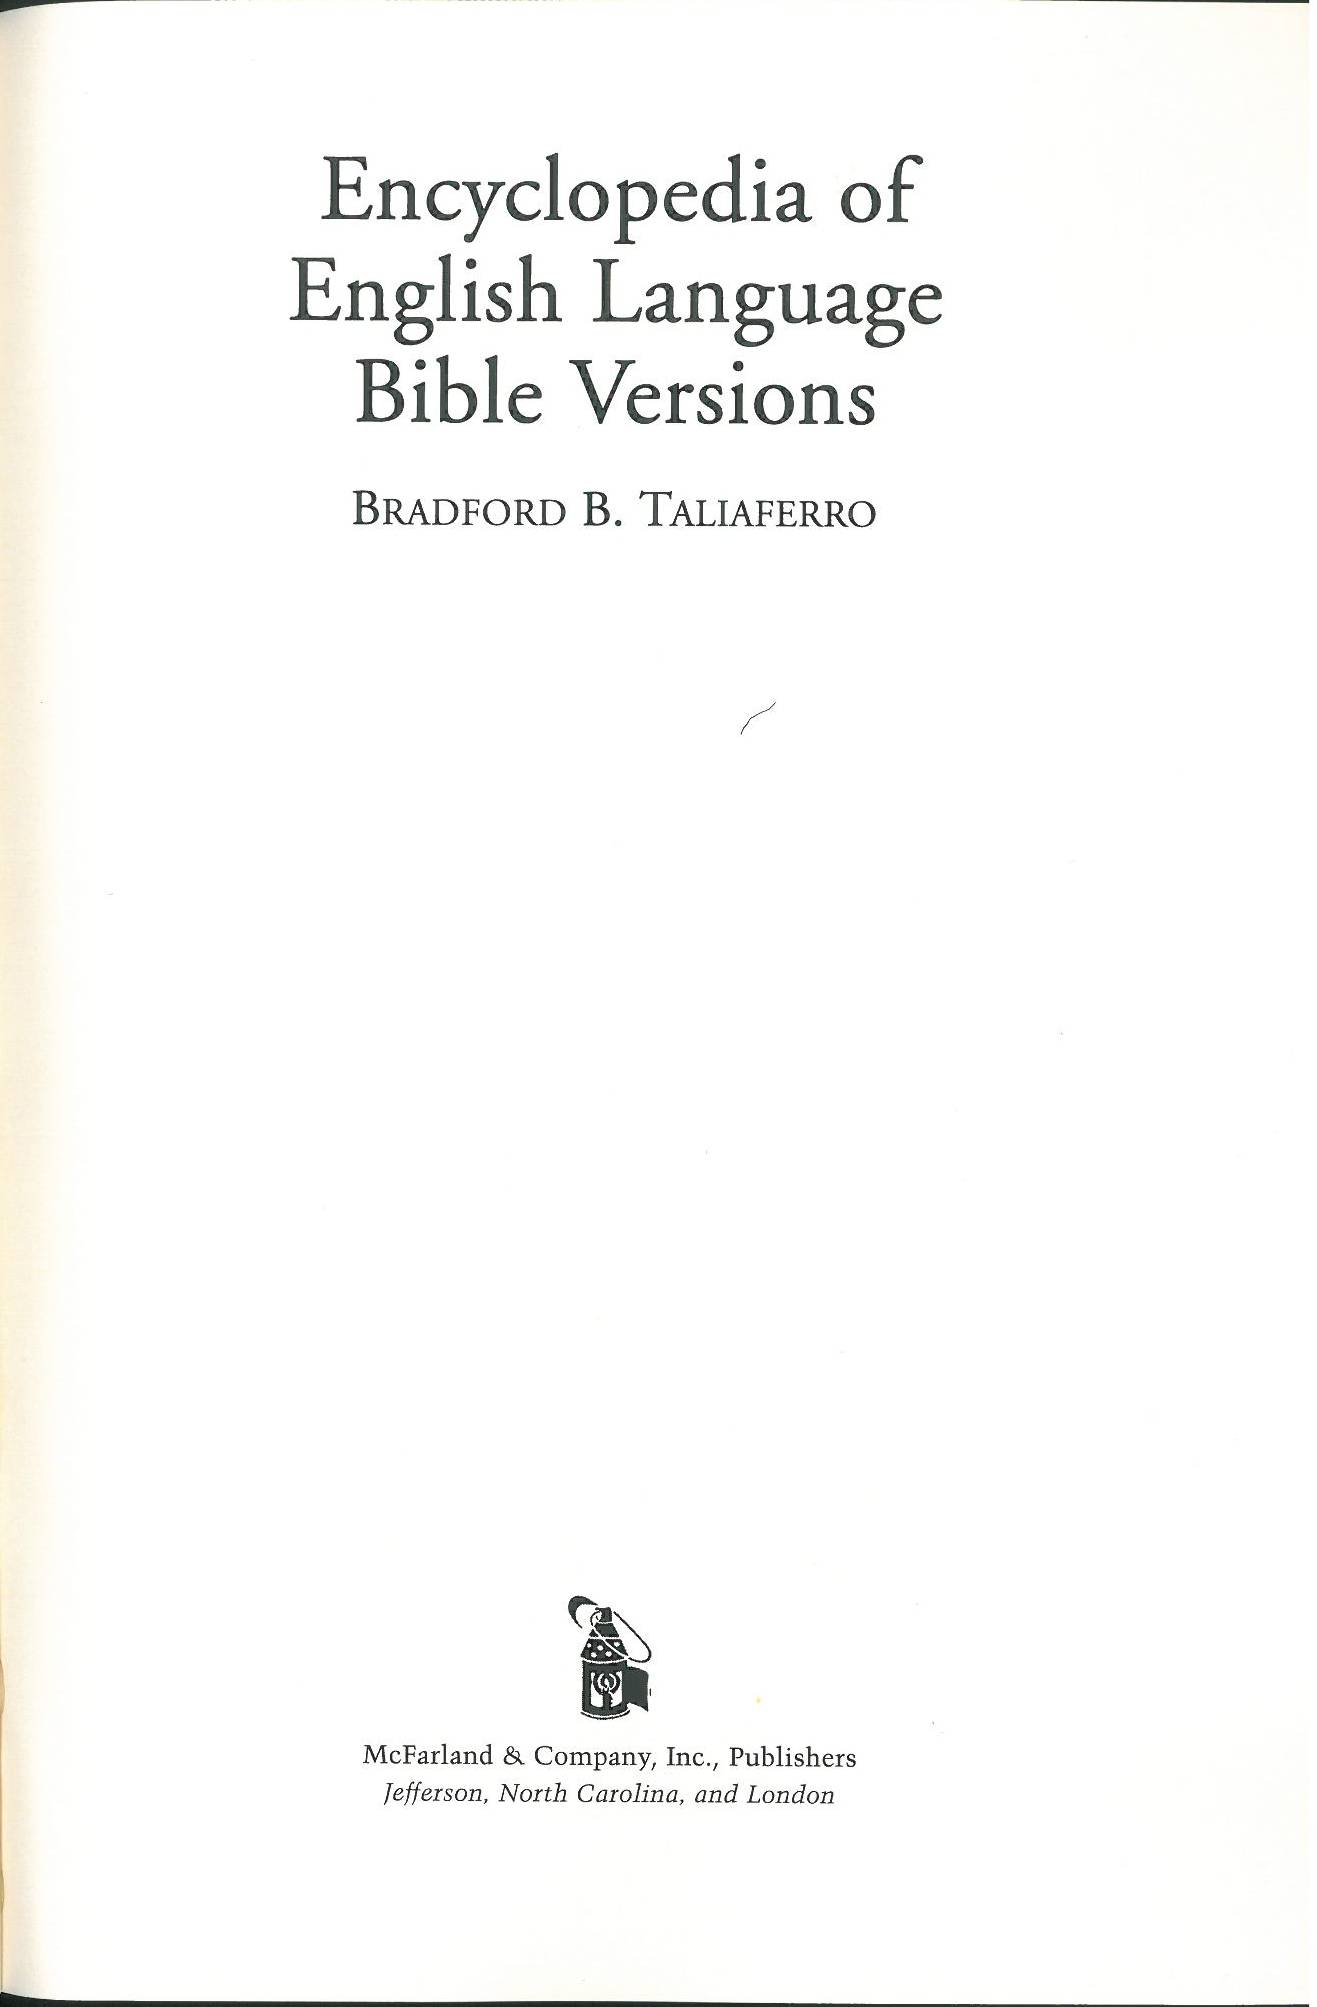 Catalogues - Internet Bible Catalog